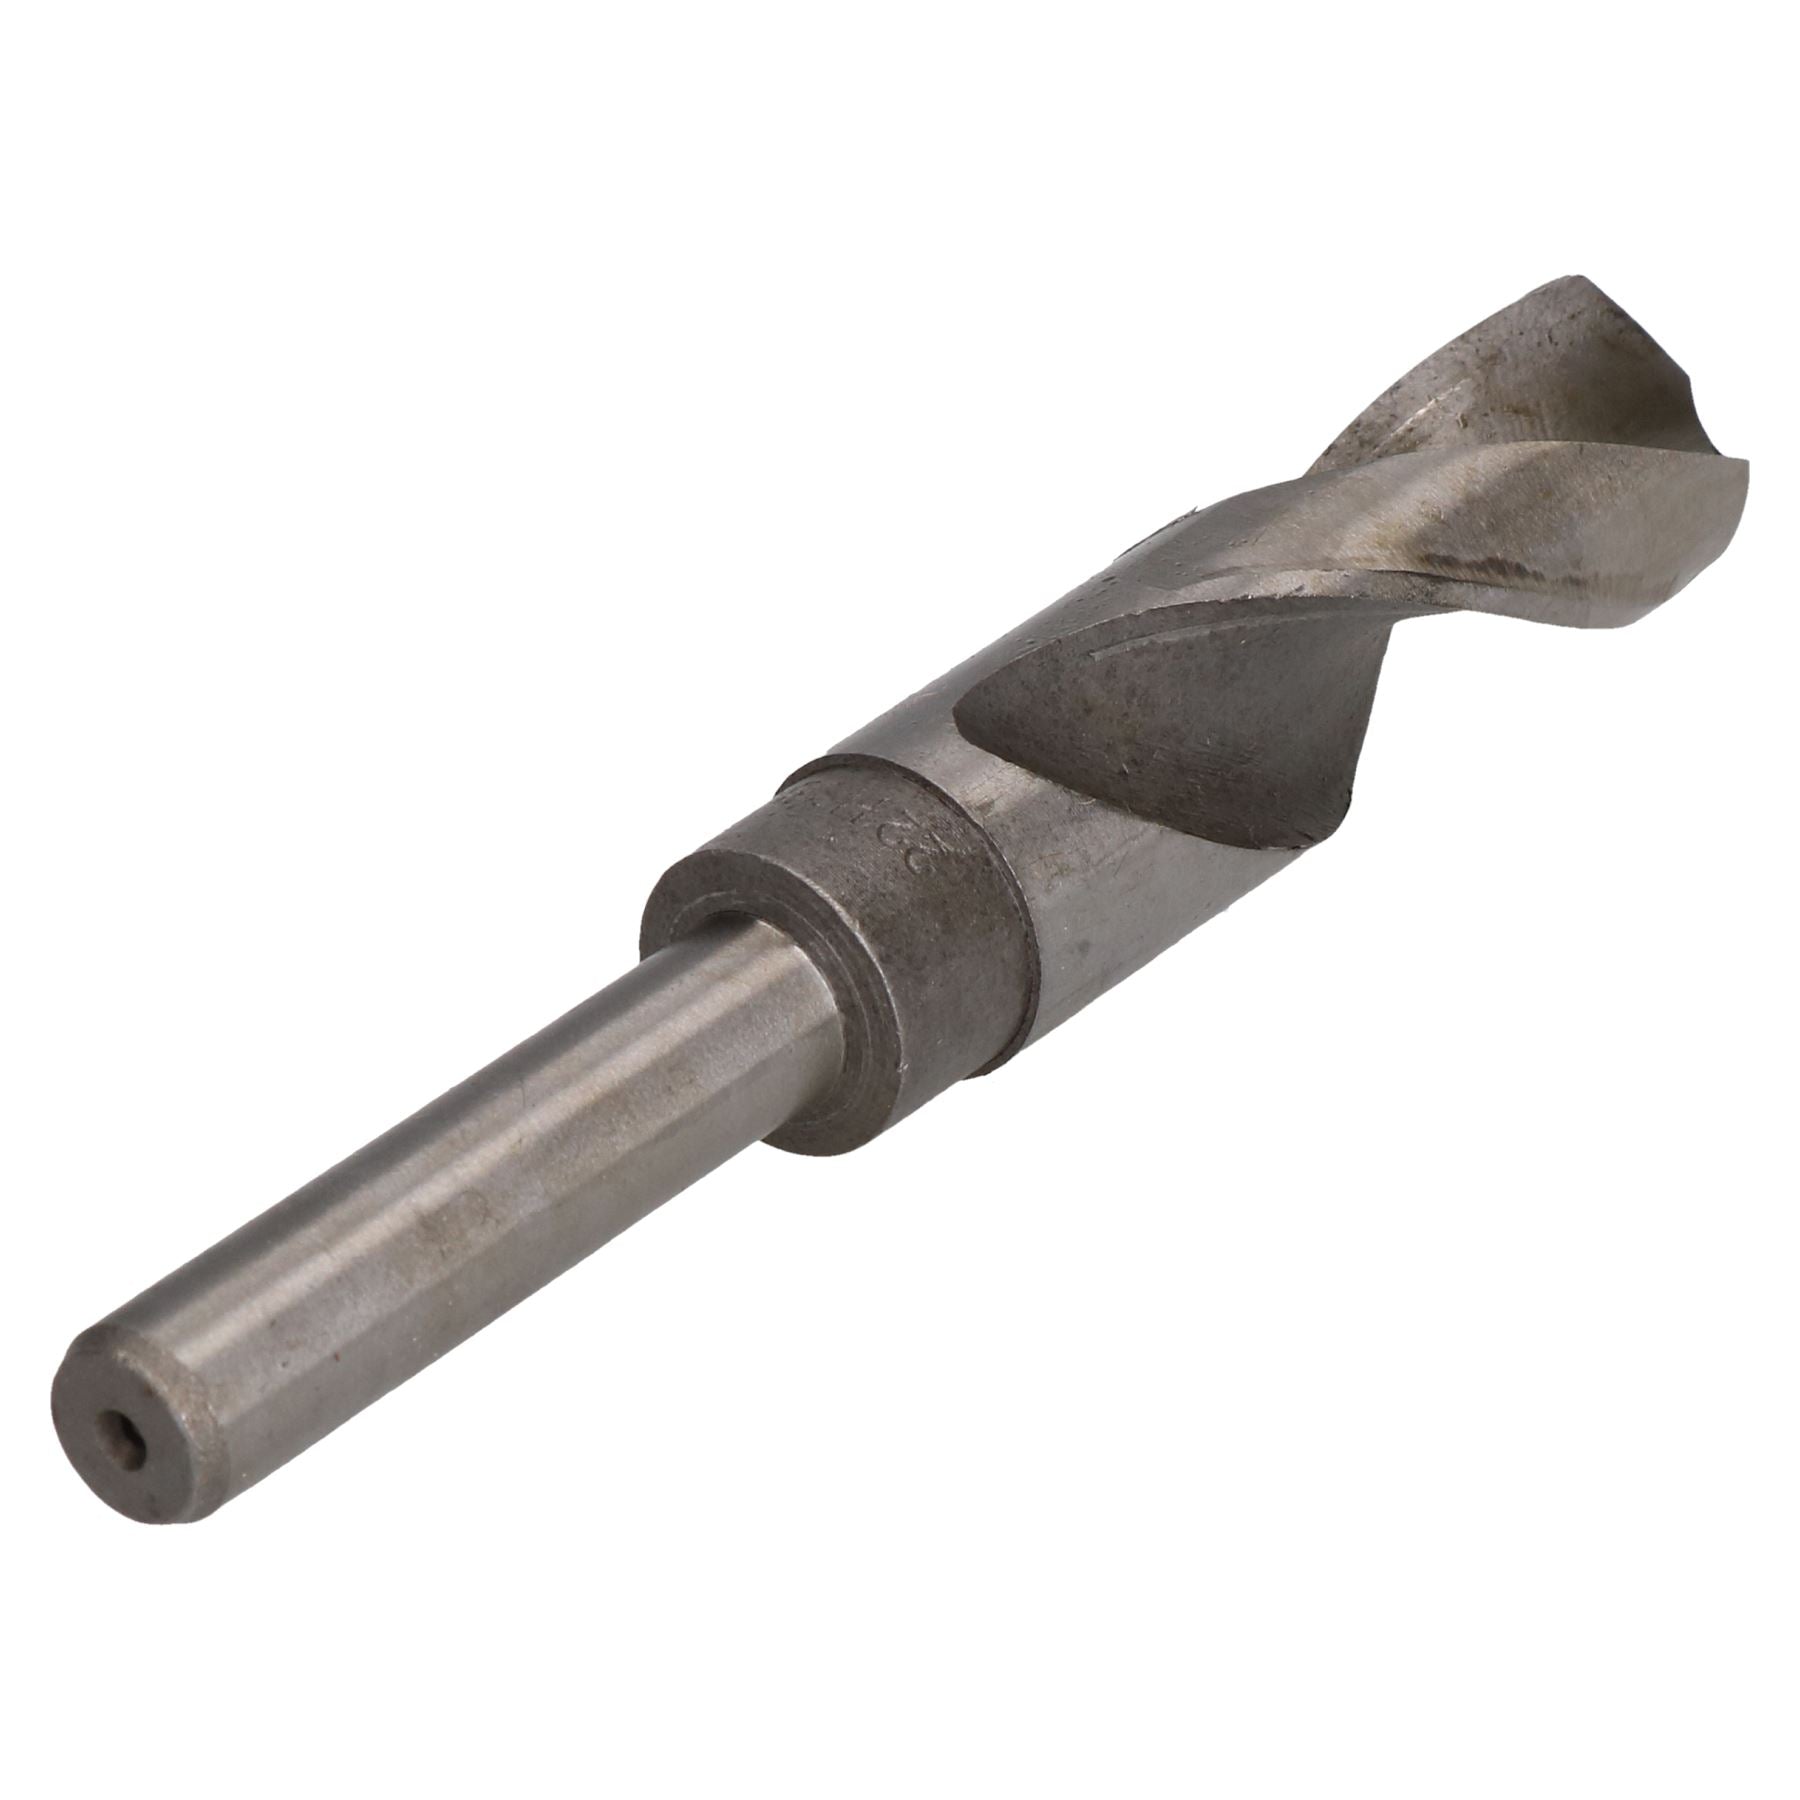 HSS 14mm-25mm Blacksmiths Twist Drill Bit With 1/2" Shank For Steel Metal